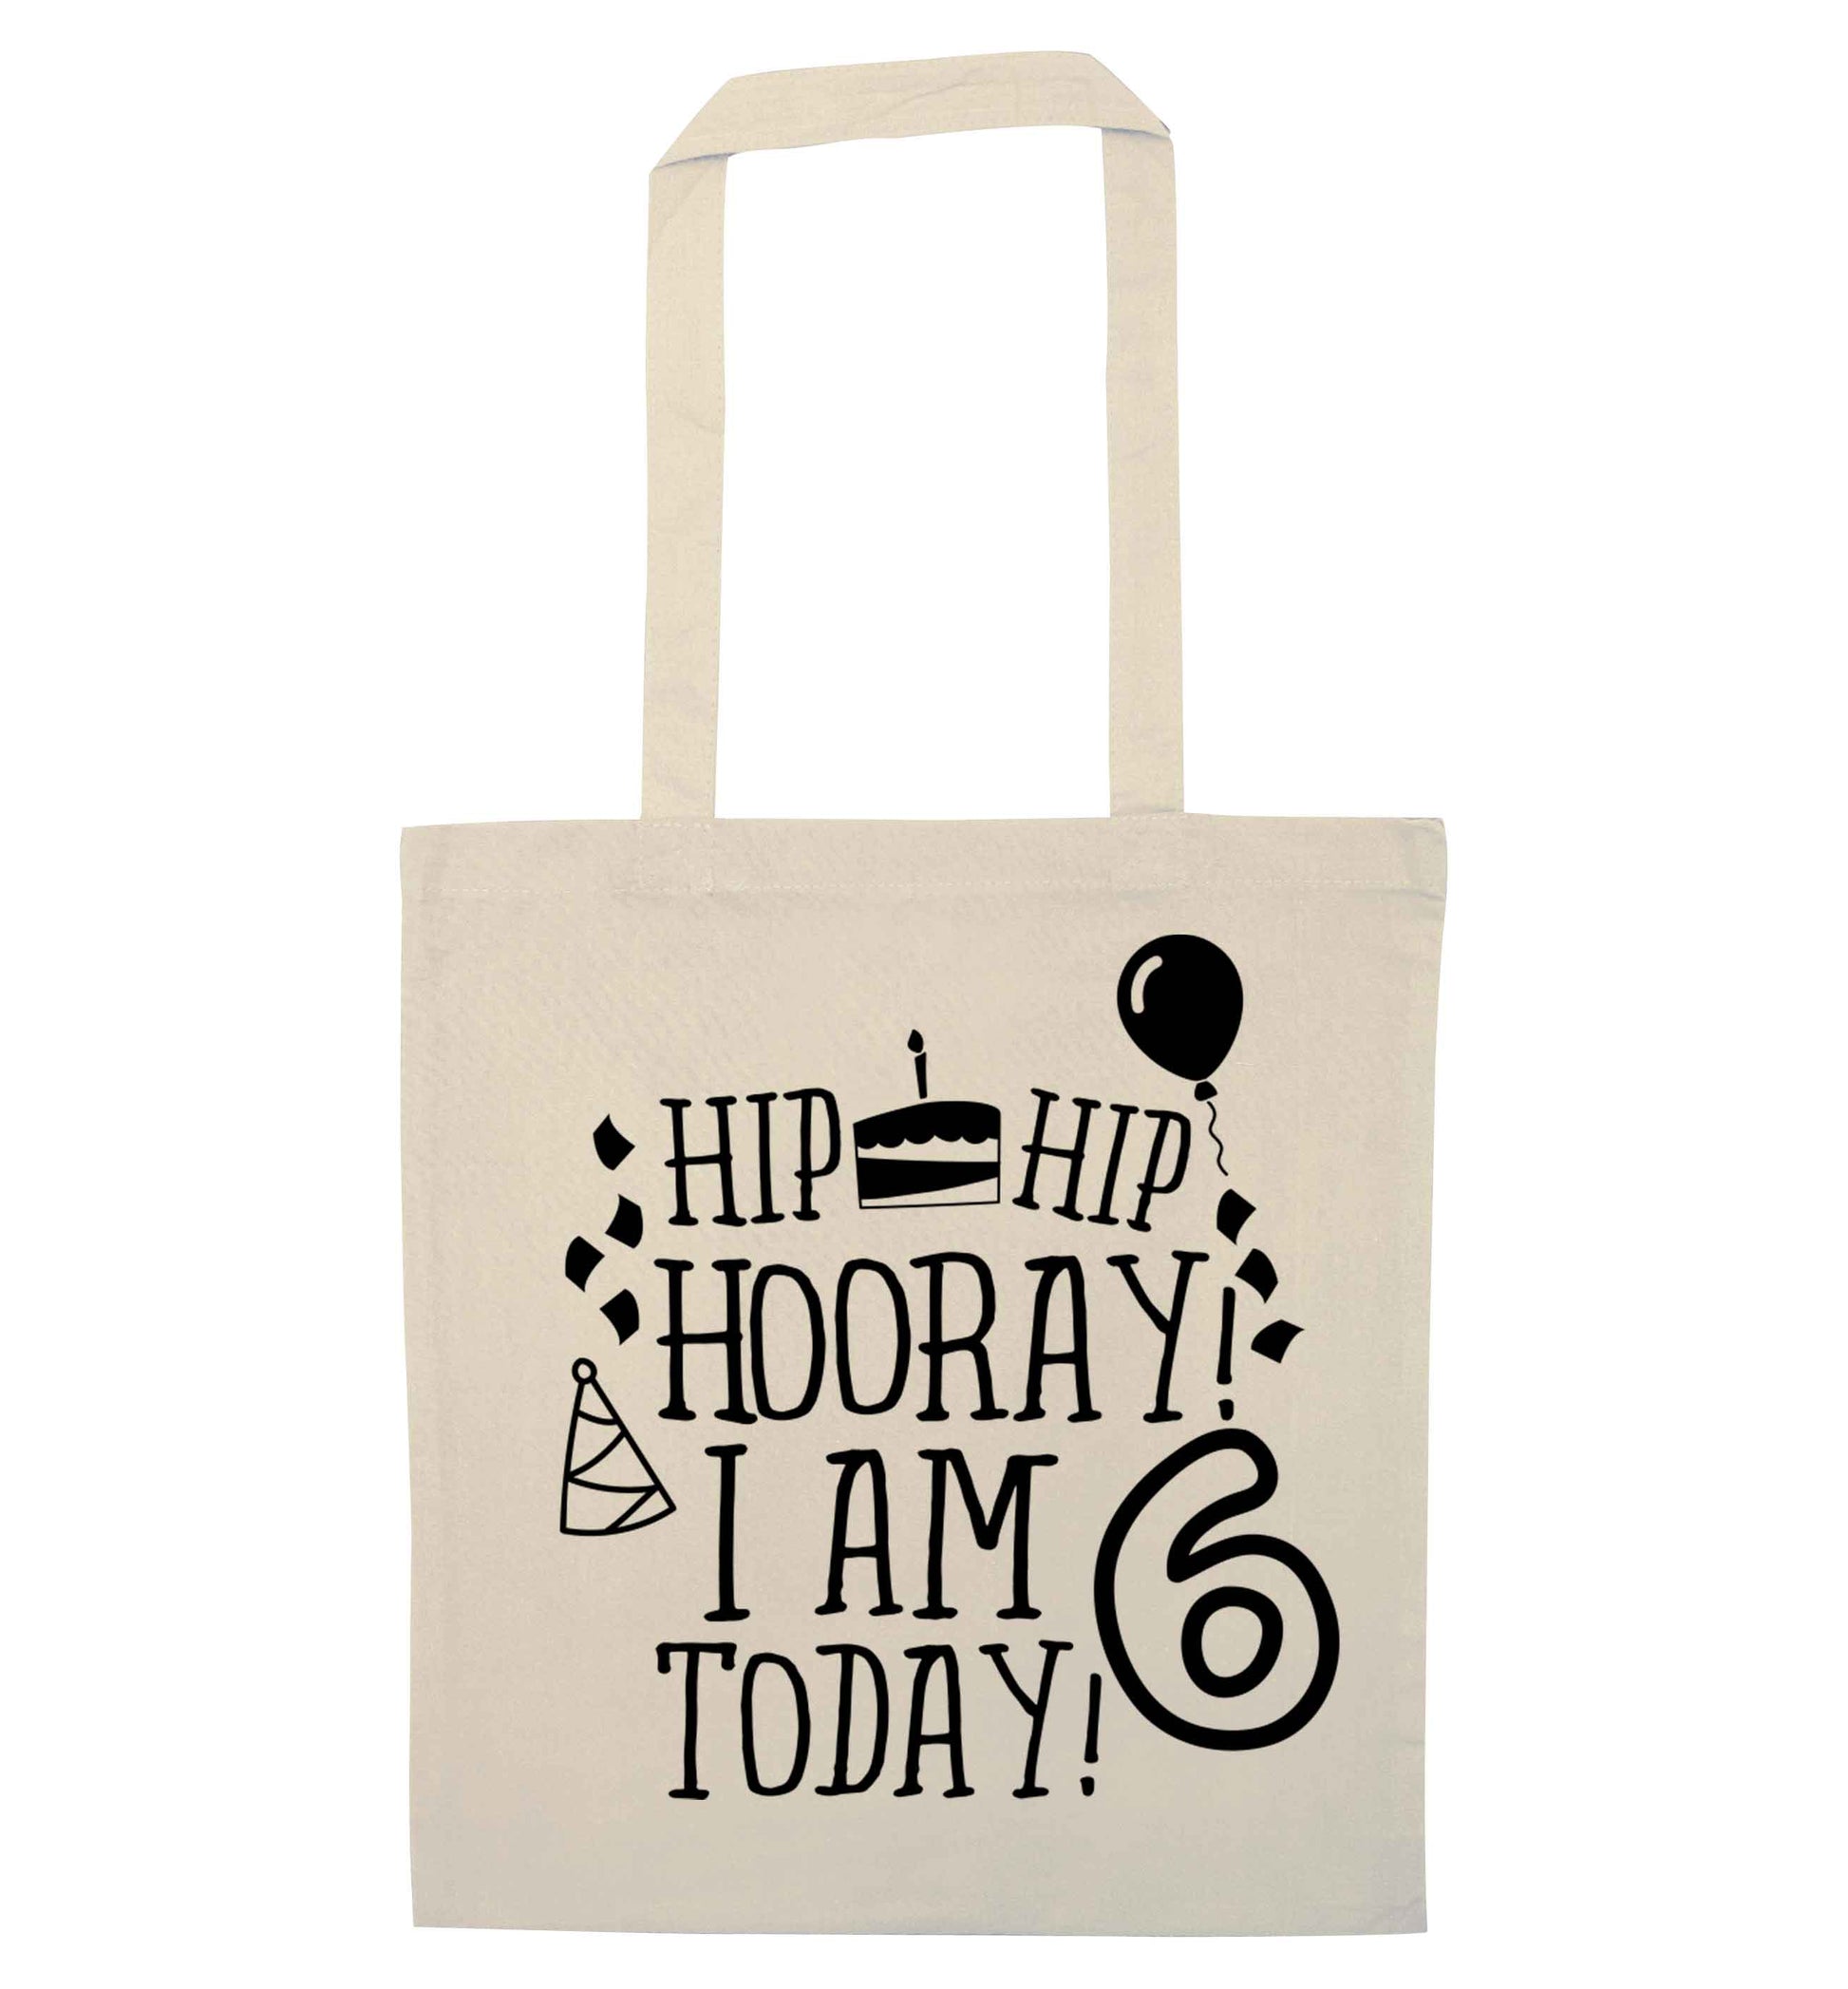 Hip hip hooray I am six today! natural tote bag